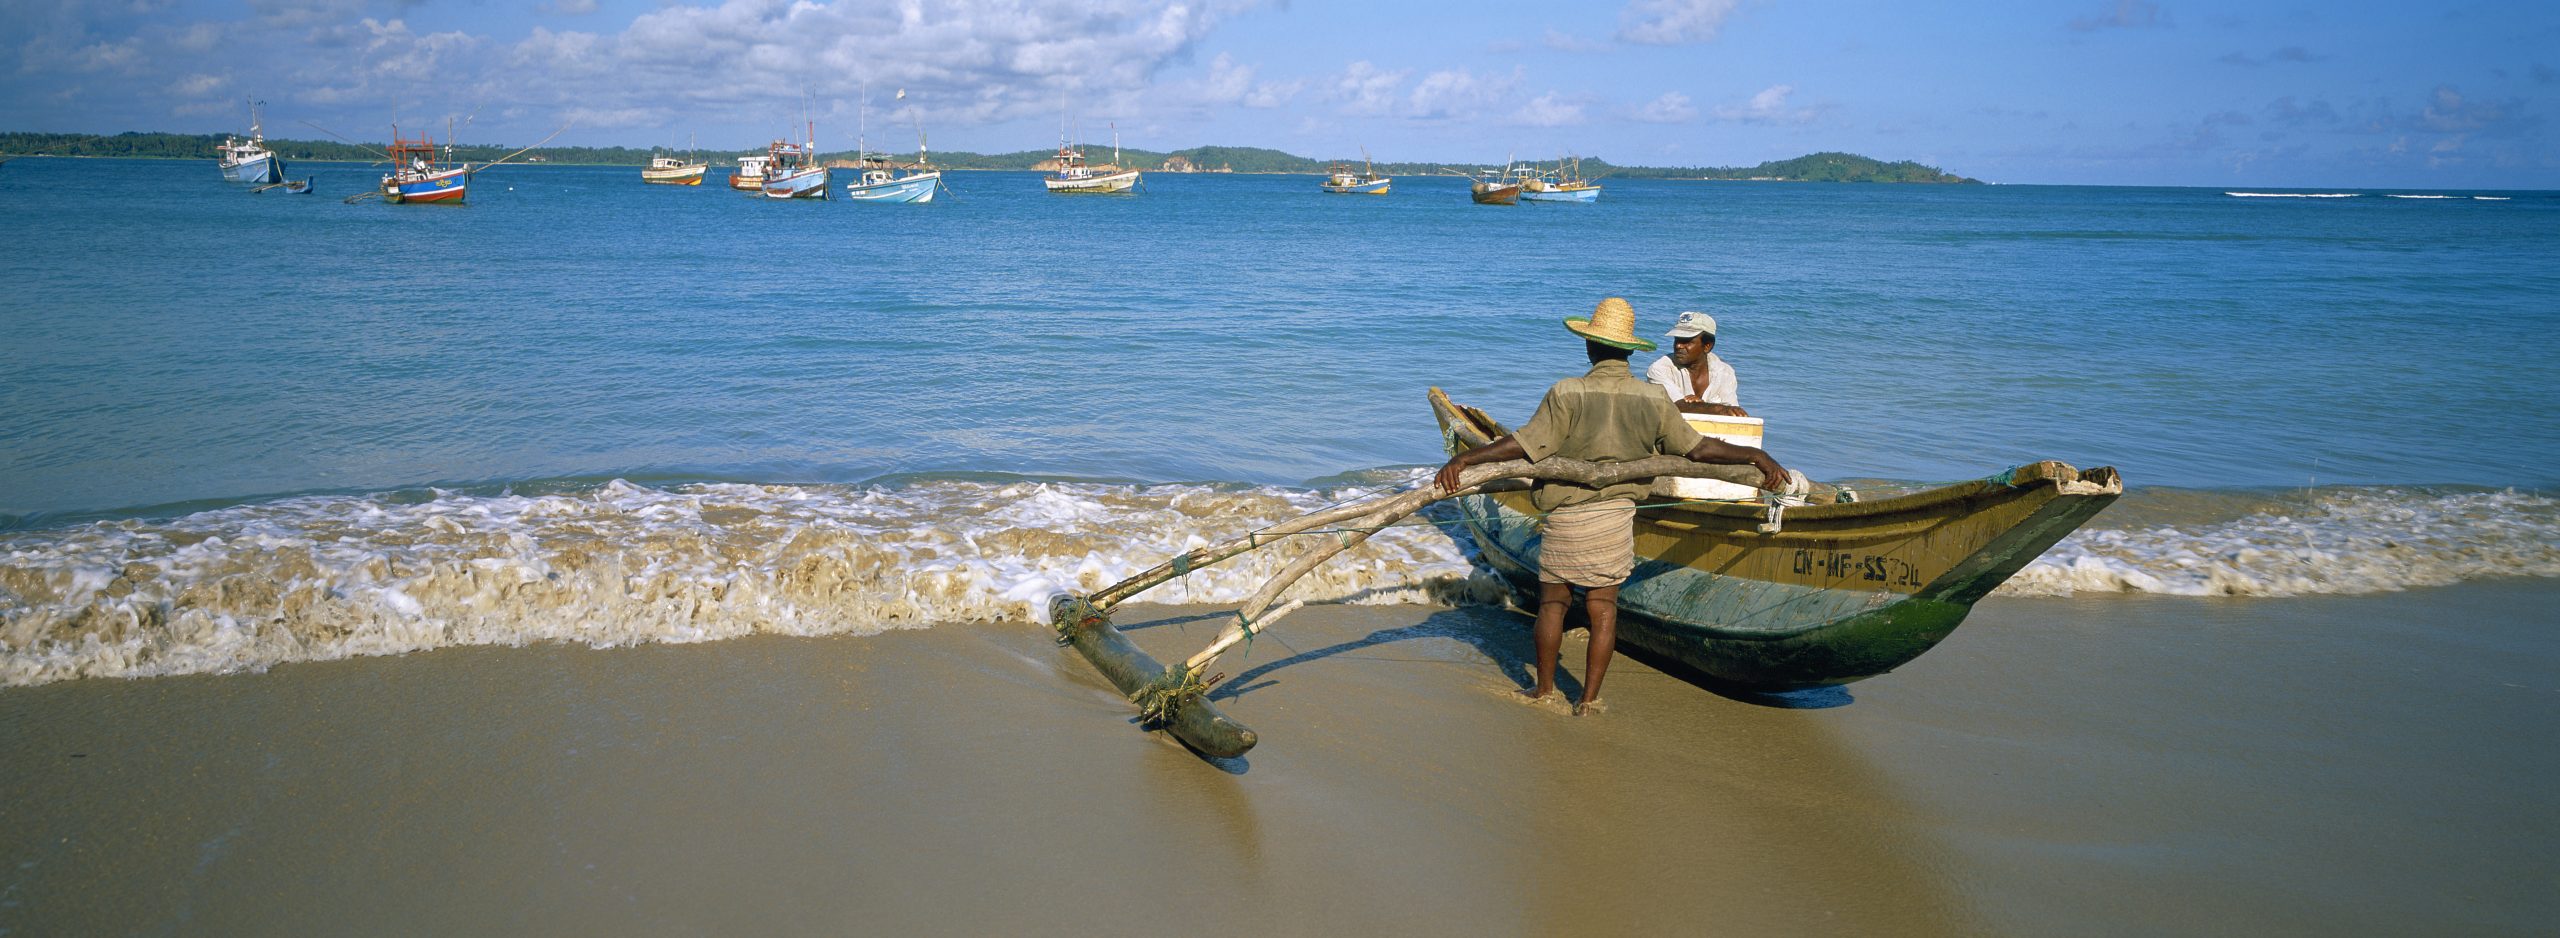 Weligama beach - Fisherman - South coast - Sri Lanka